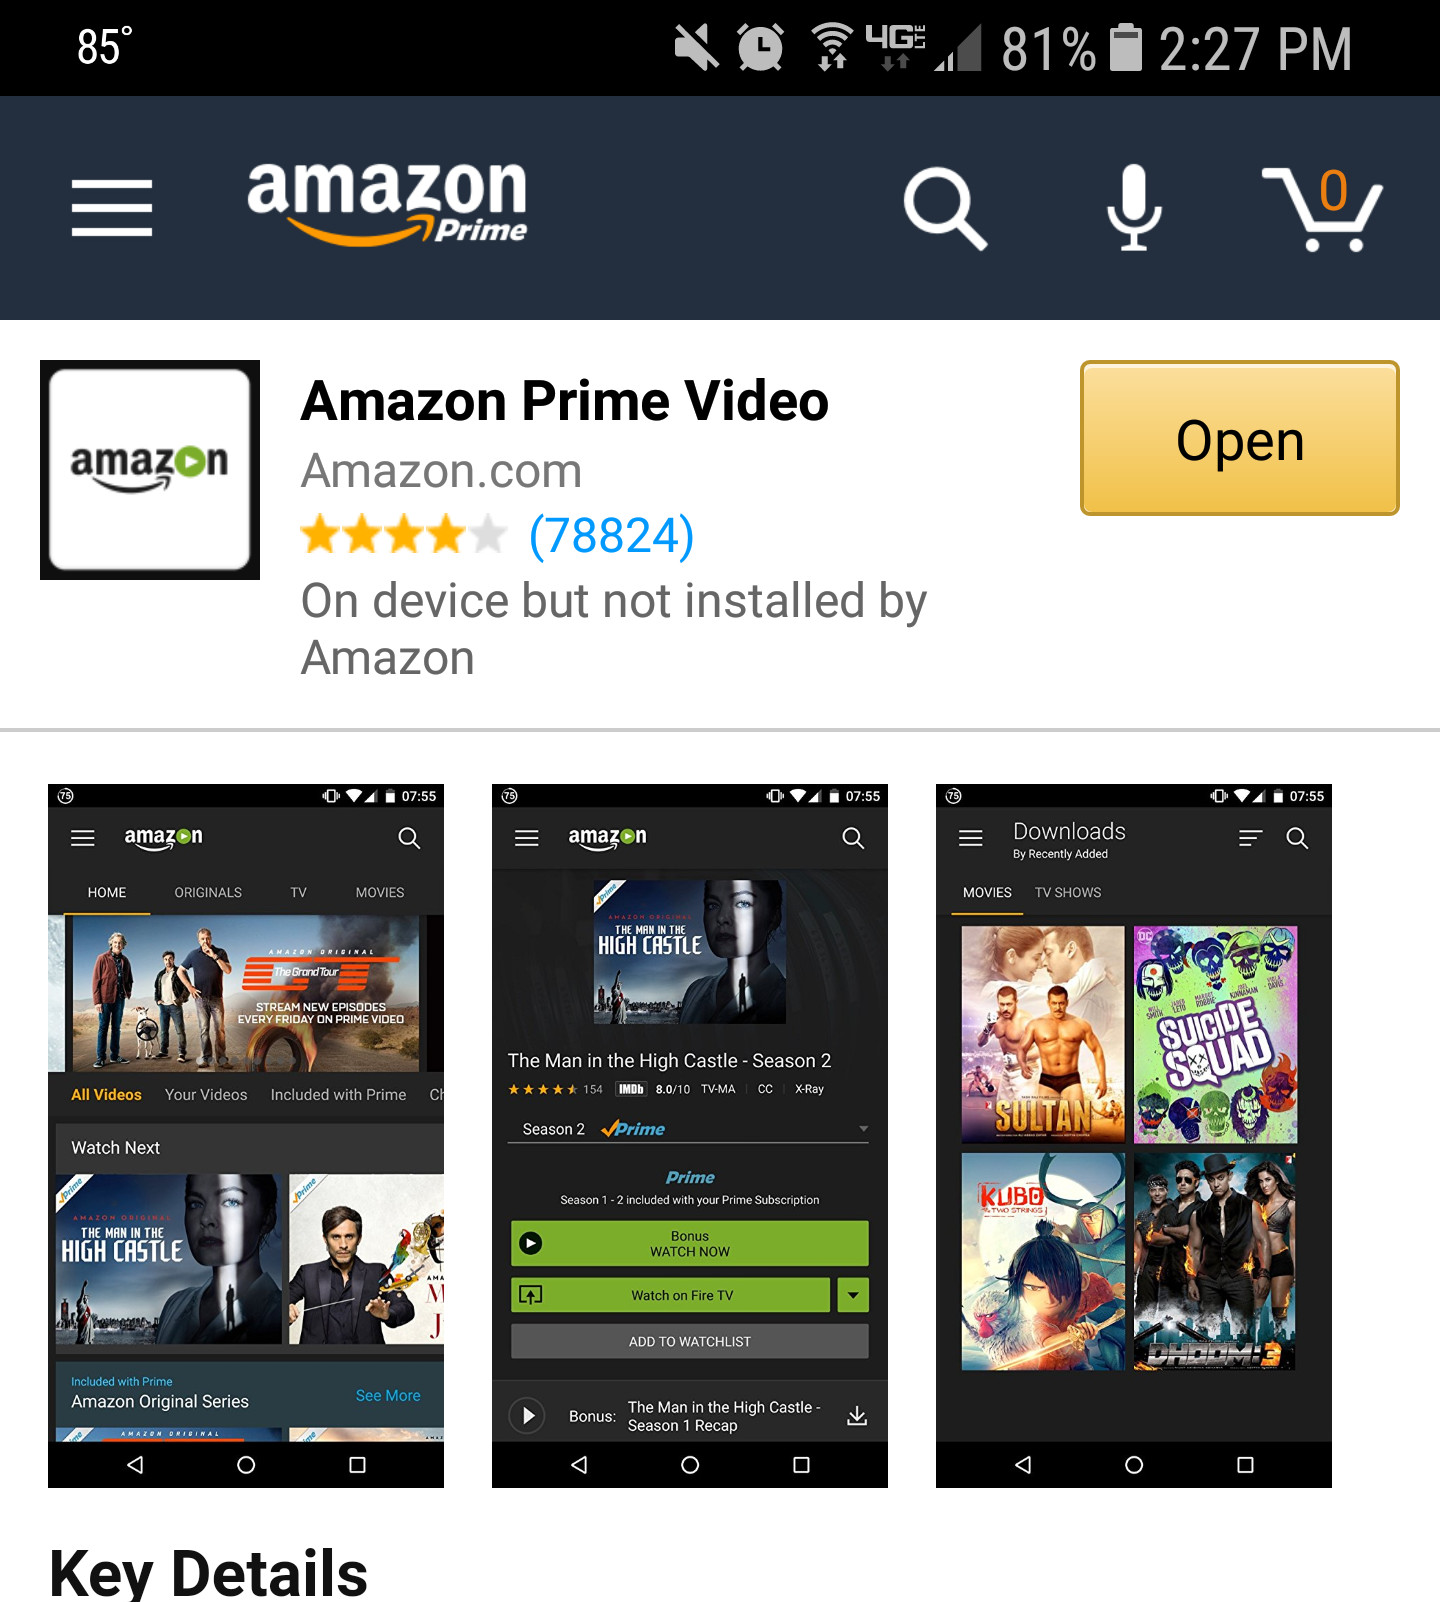 amazon prime photos desktop app reviews